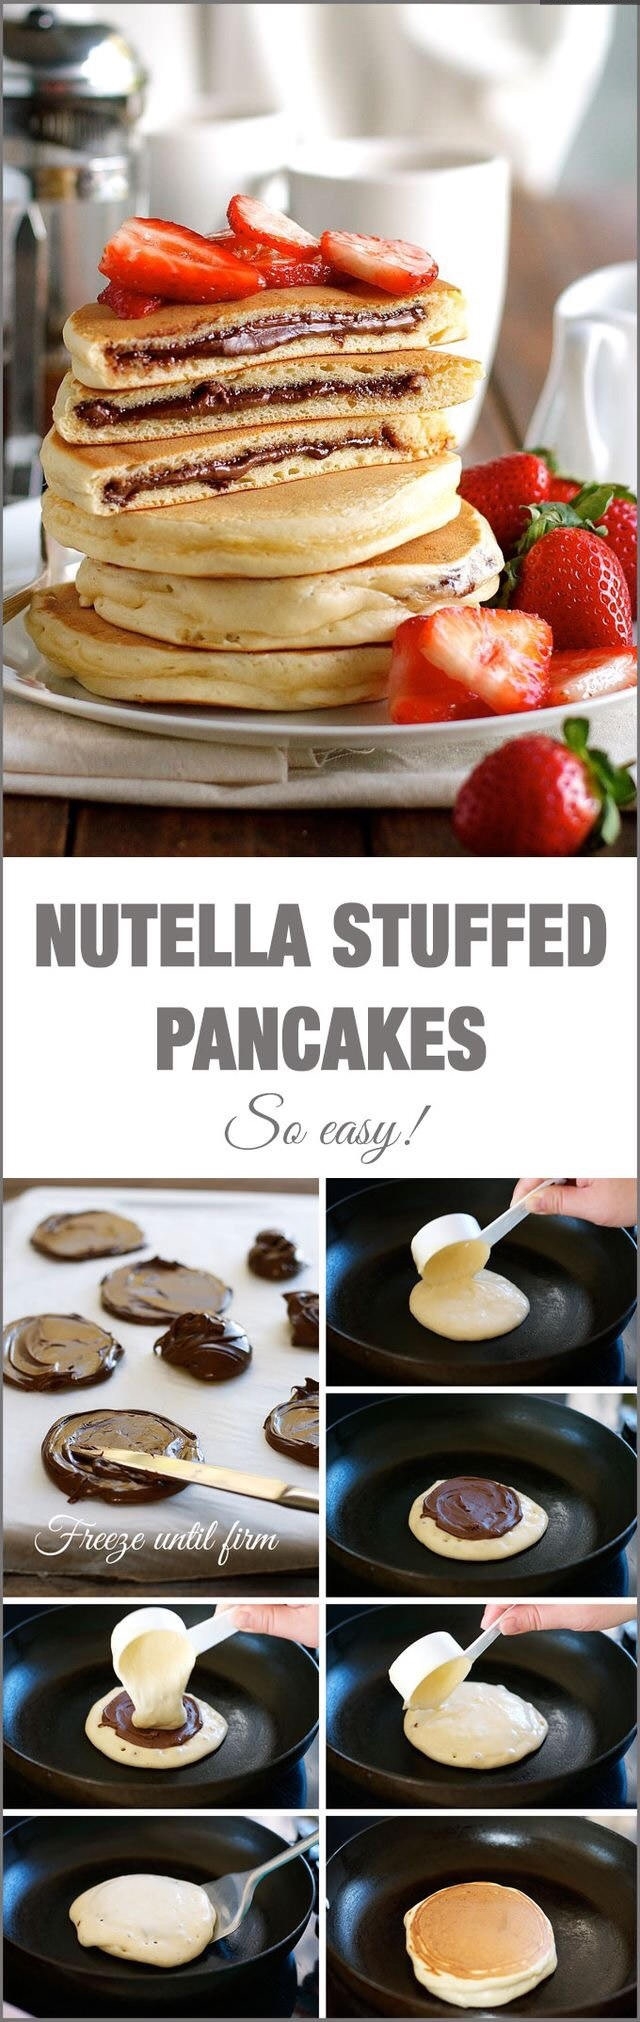 Nutella pancakes